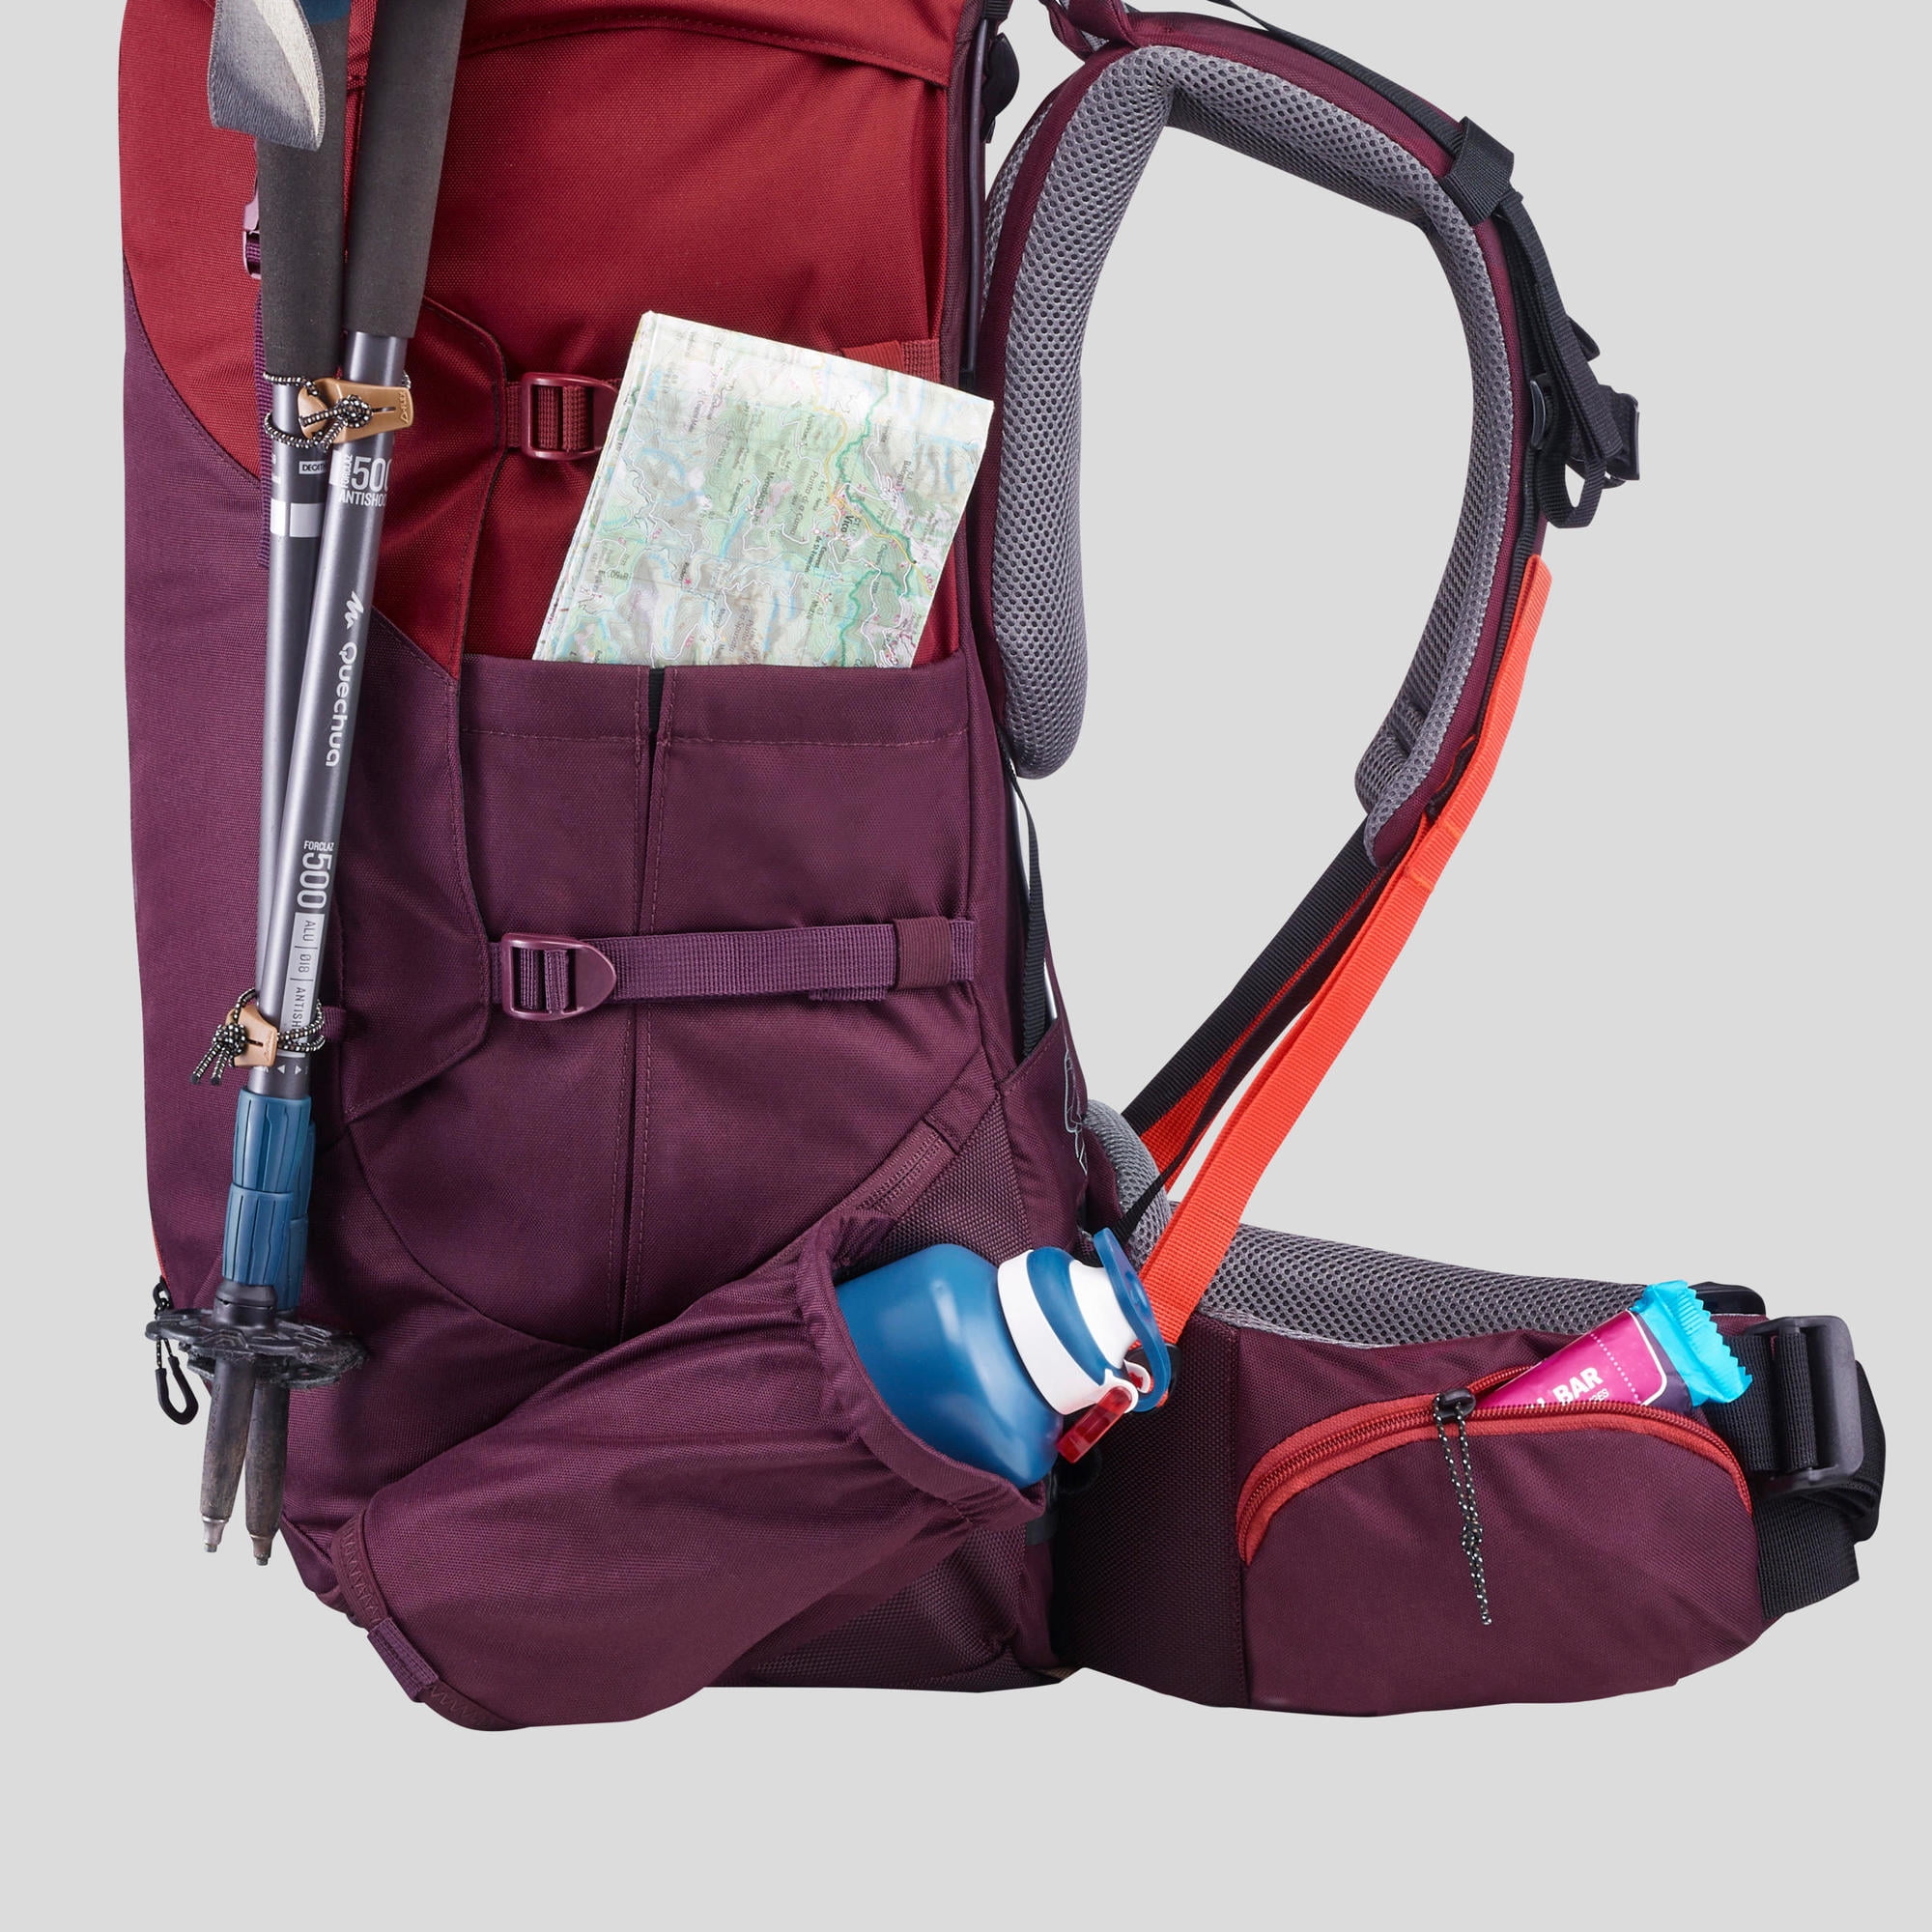 Forclaz Trek 100 Easyfit, 50 L Hiking Backpack, Women's